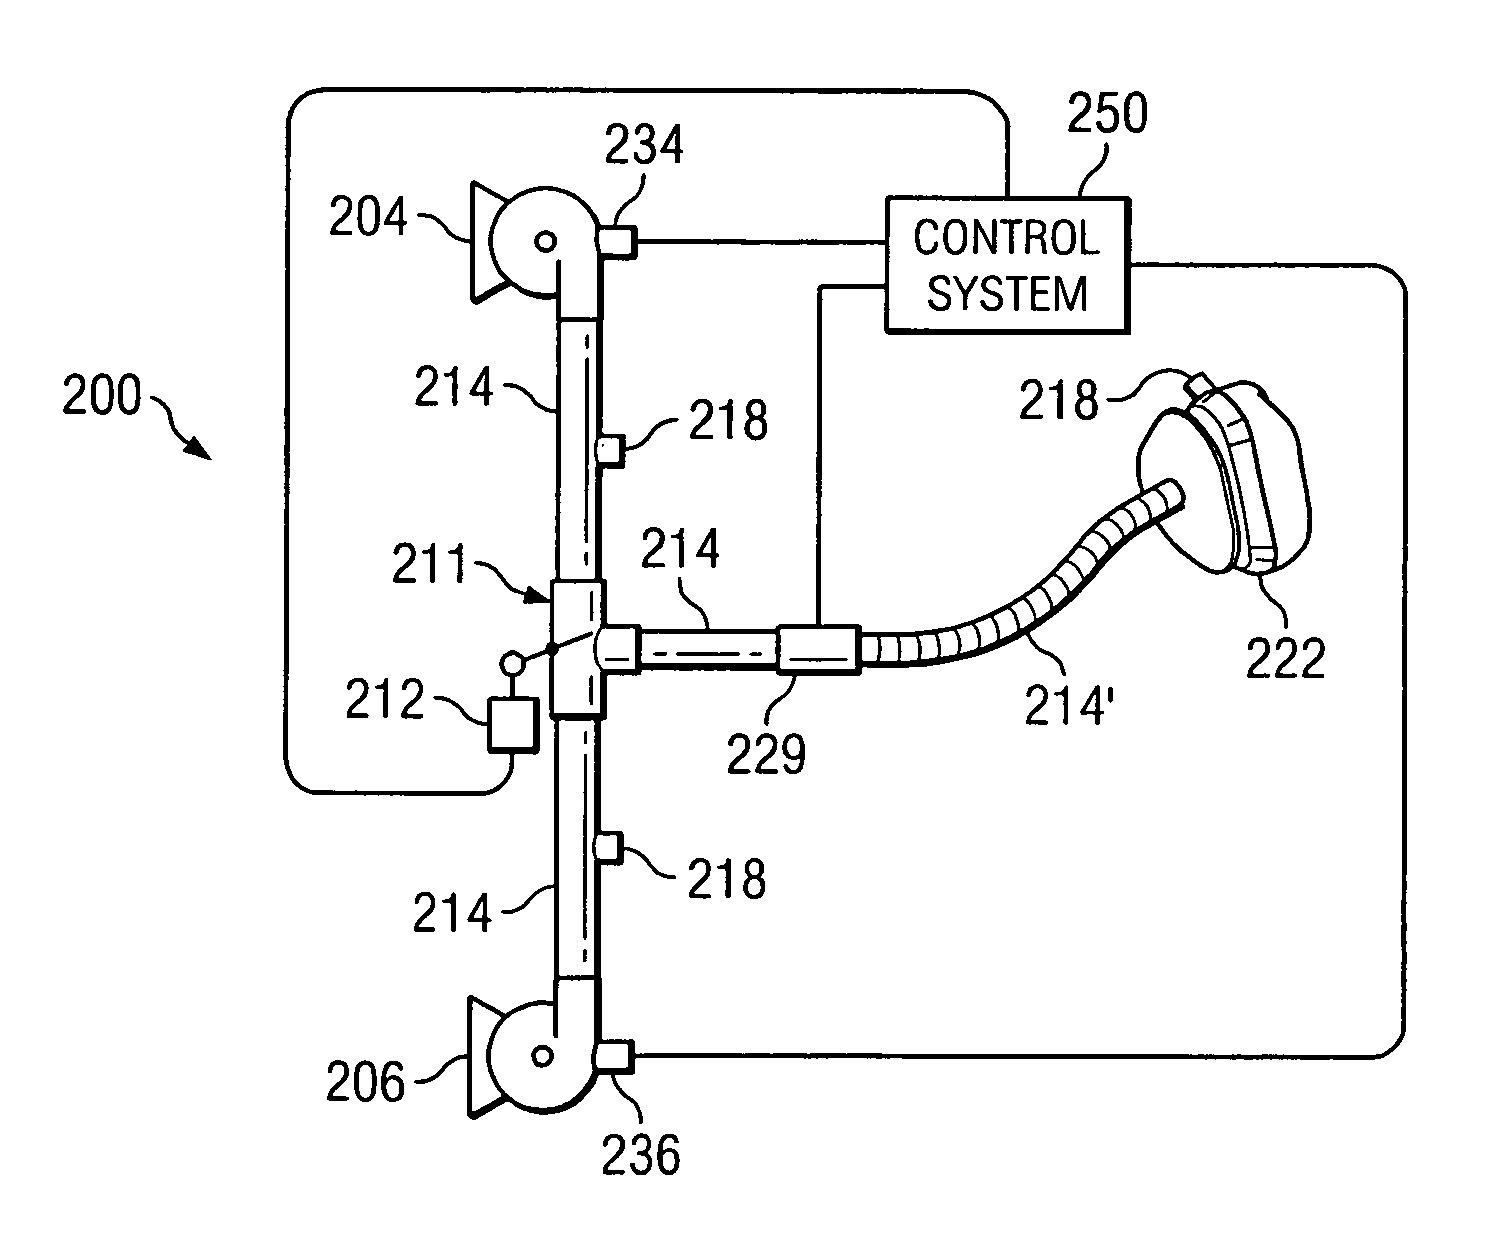 Ventilator with dual gas supply